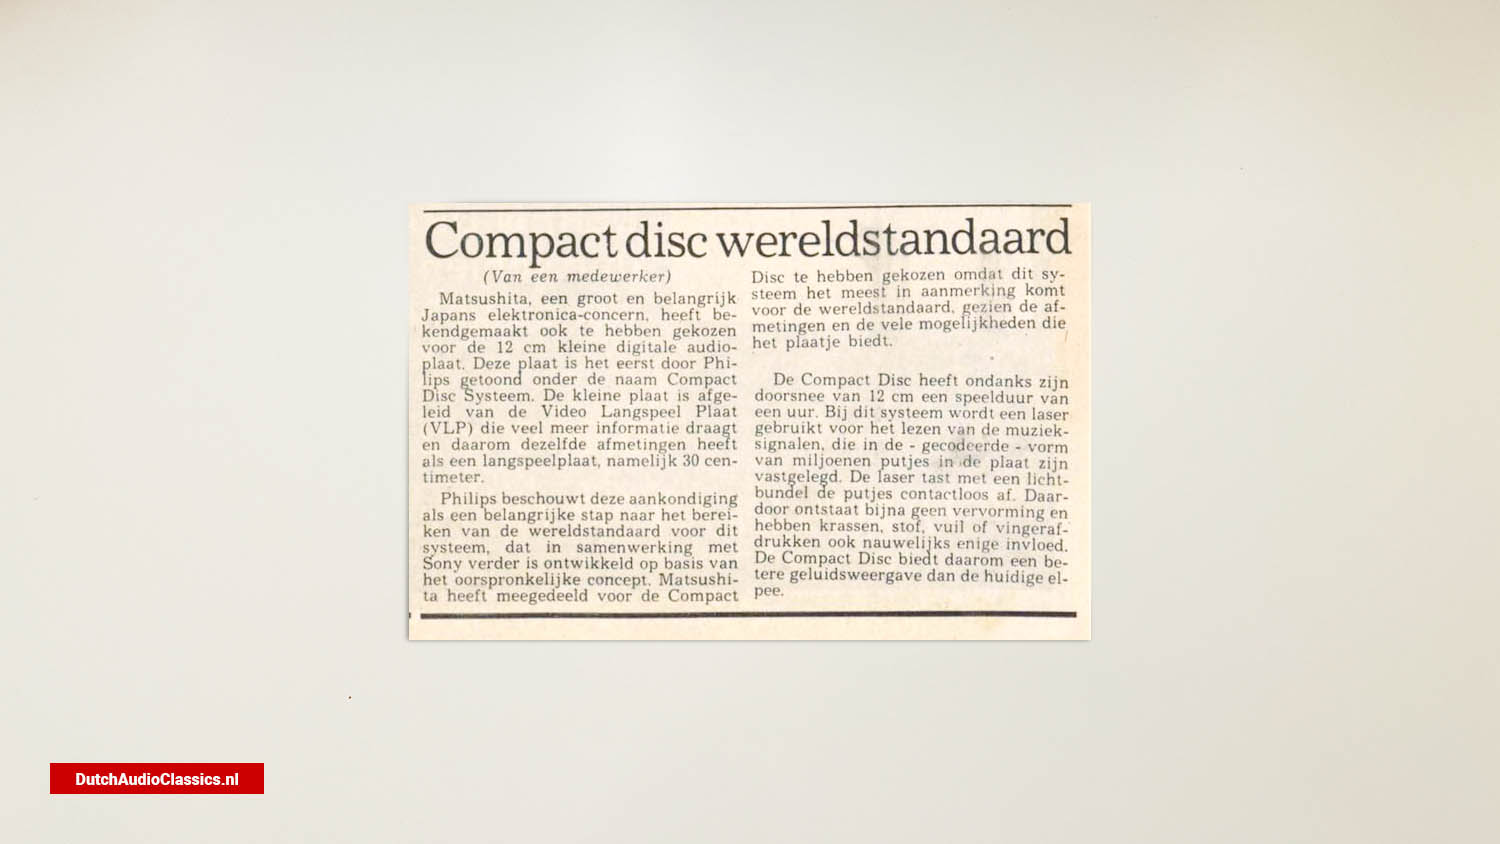 newspaper article Compact disc world standard